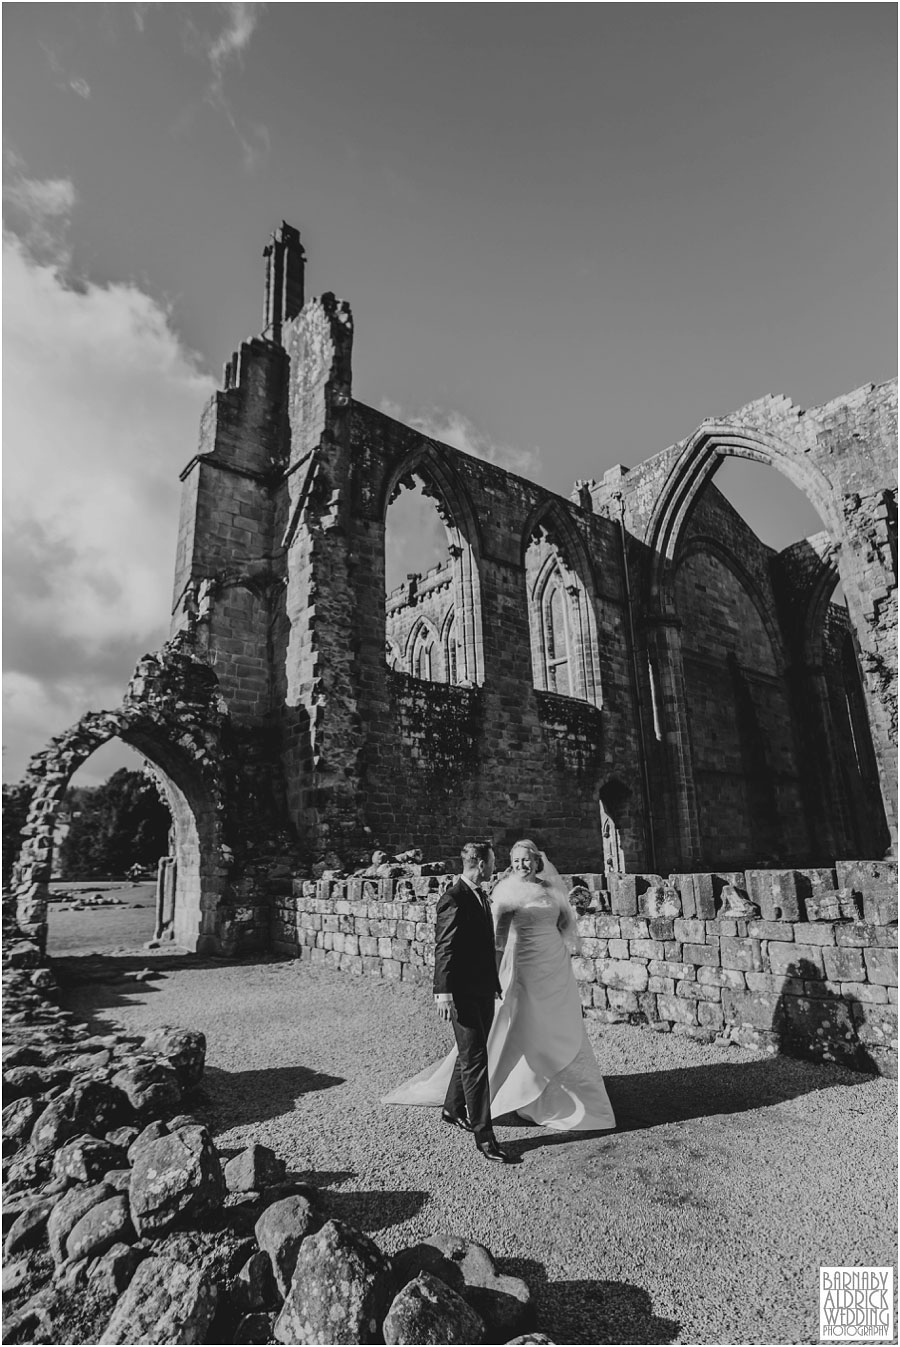 Bolton Abbey Wedding Photography, Devonshire Arms Wedding Photography, Yorkshire Dales Wedding Photography, Yorkshire Photographer Barnaby Aldrick, Yorkshire Photographer Barnaby Aldrick